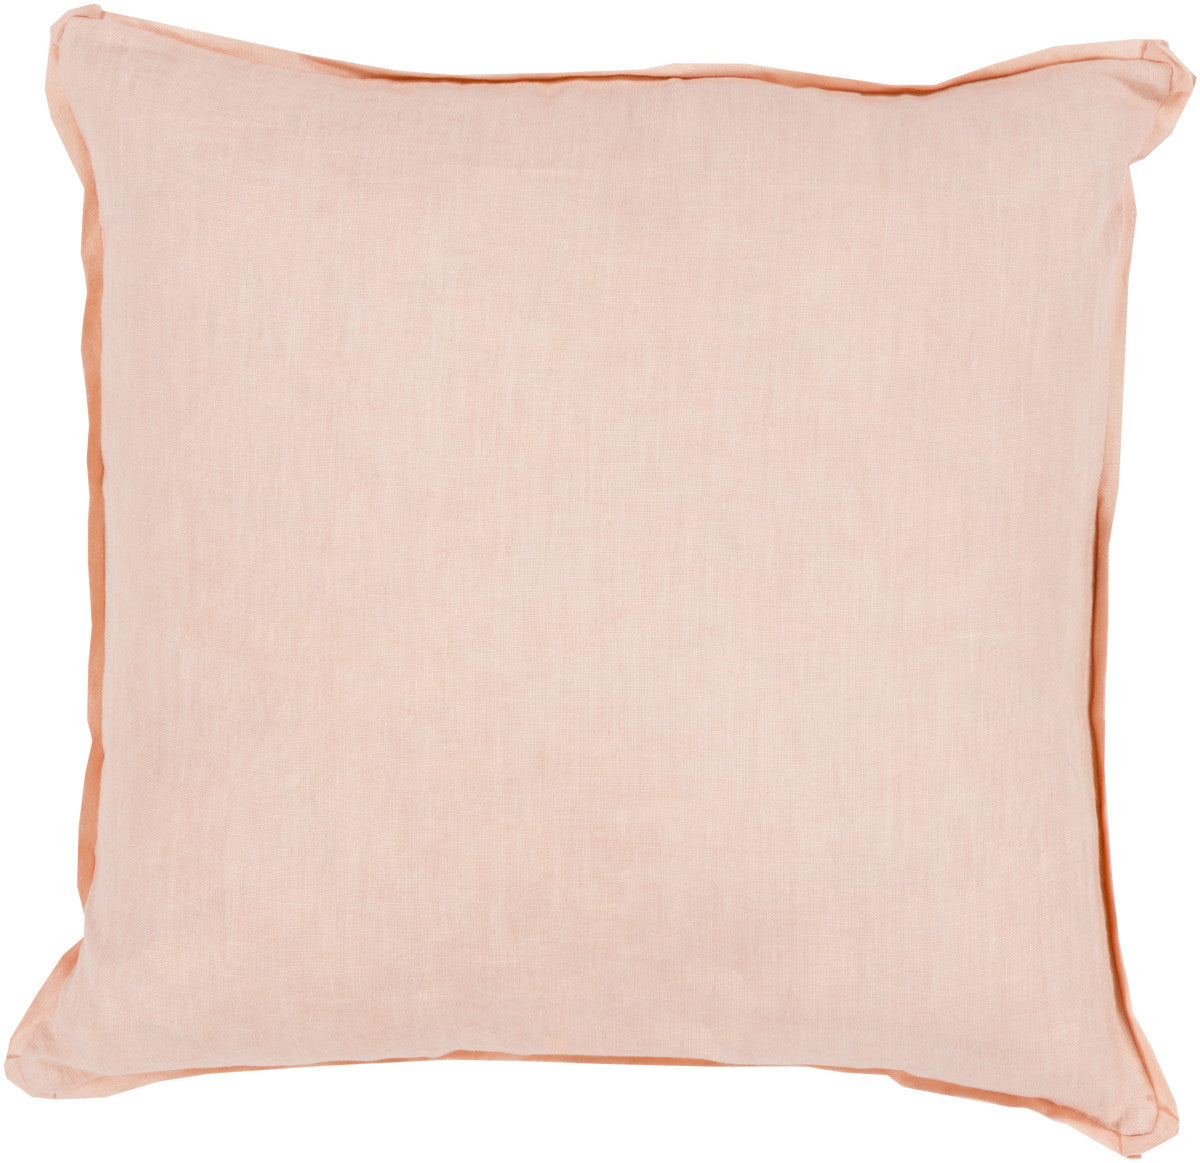 Surya Solid Luxury in Linen SL-009 Pillow main image